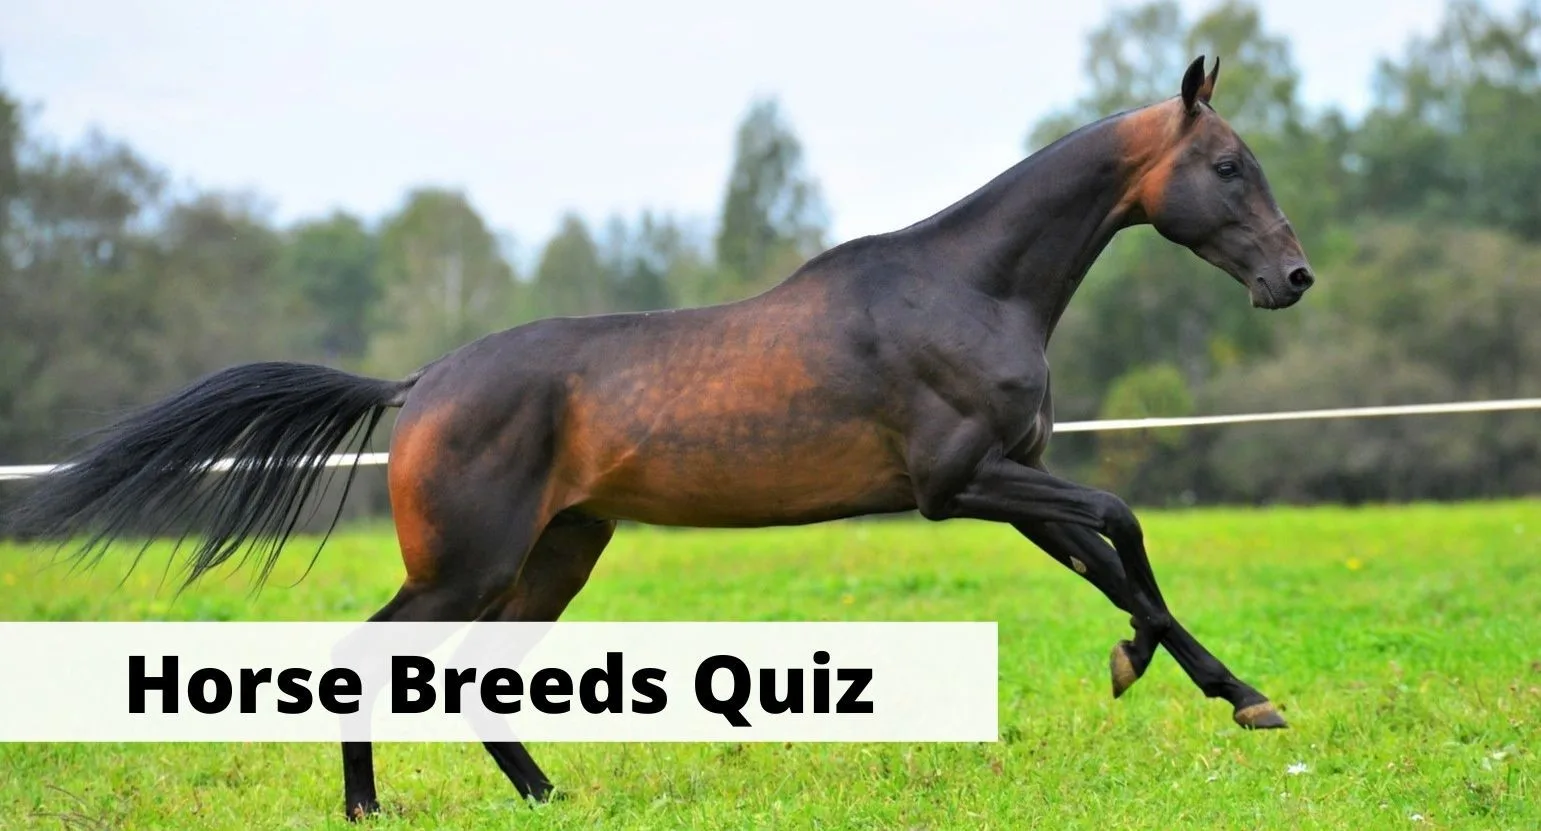 Horse Breeds quiz and trivia questions for equestrians